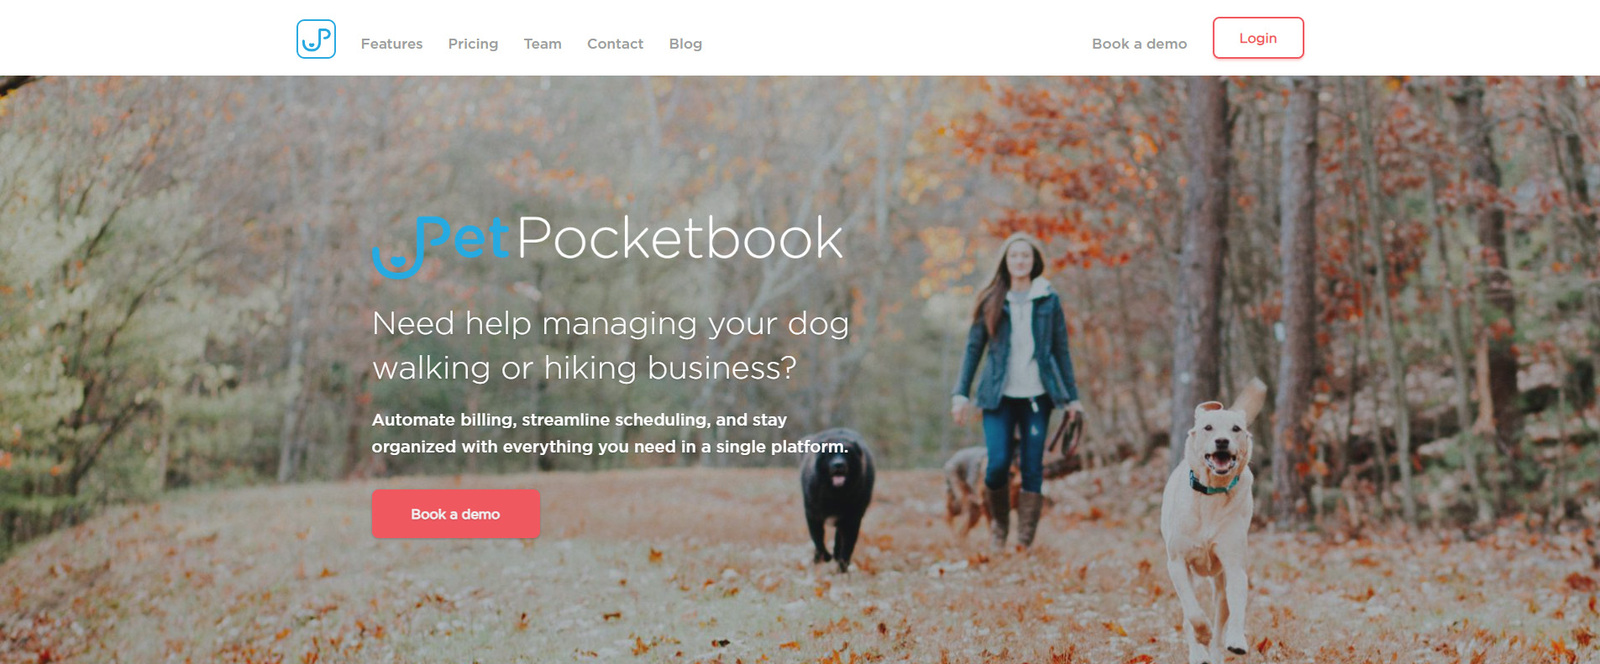 PetPocketbook 視圖，這是寵物遛狗者最好的寵物護理軟體選項之一。